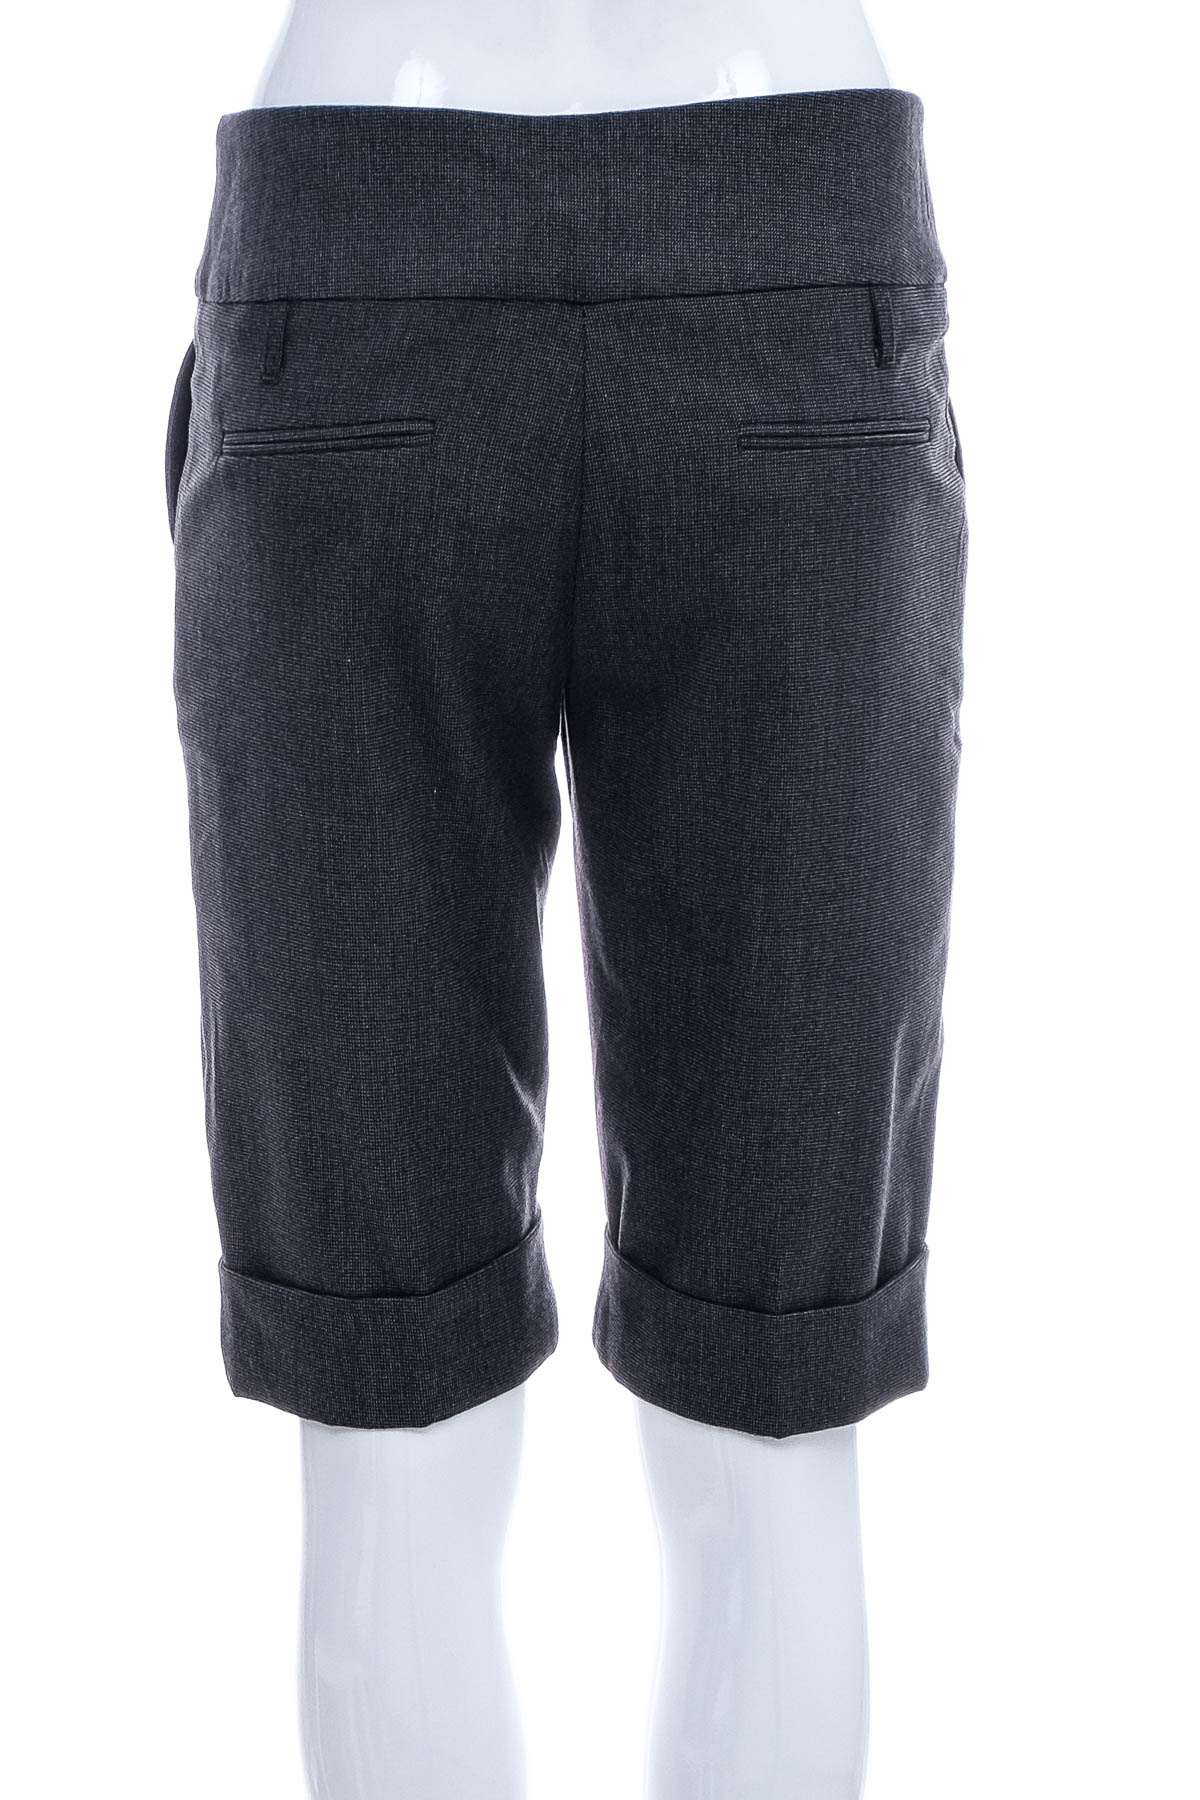 Female shorts - Orsay - 1